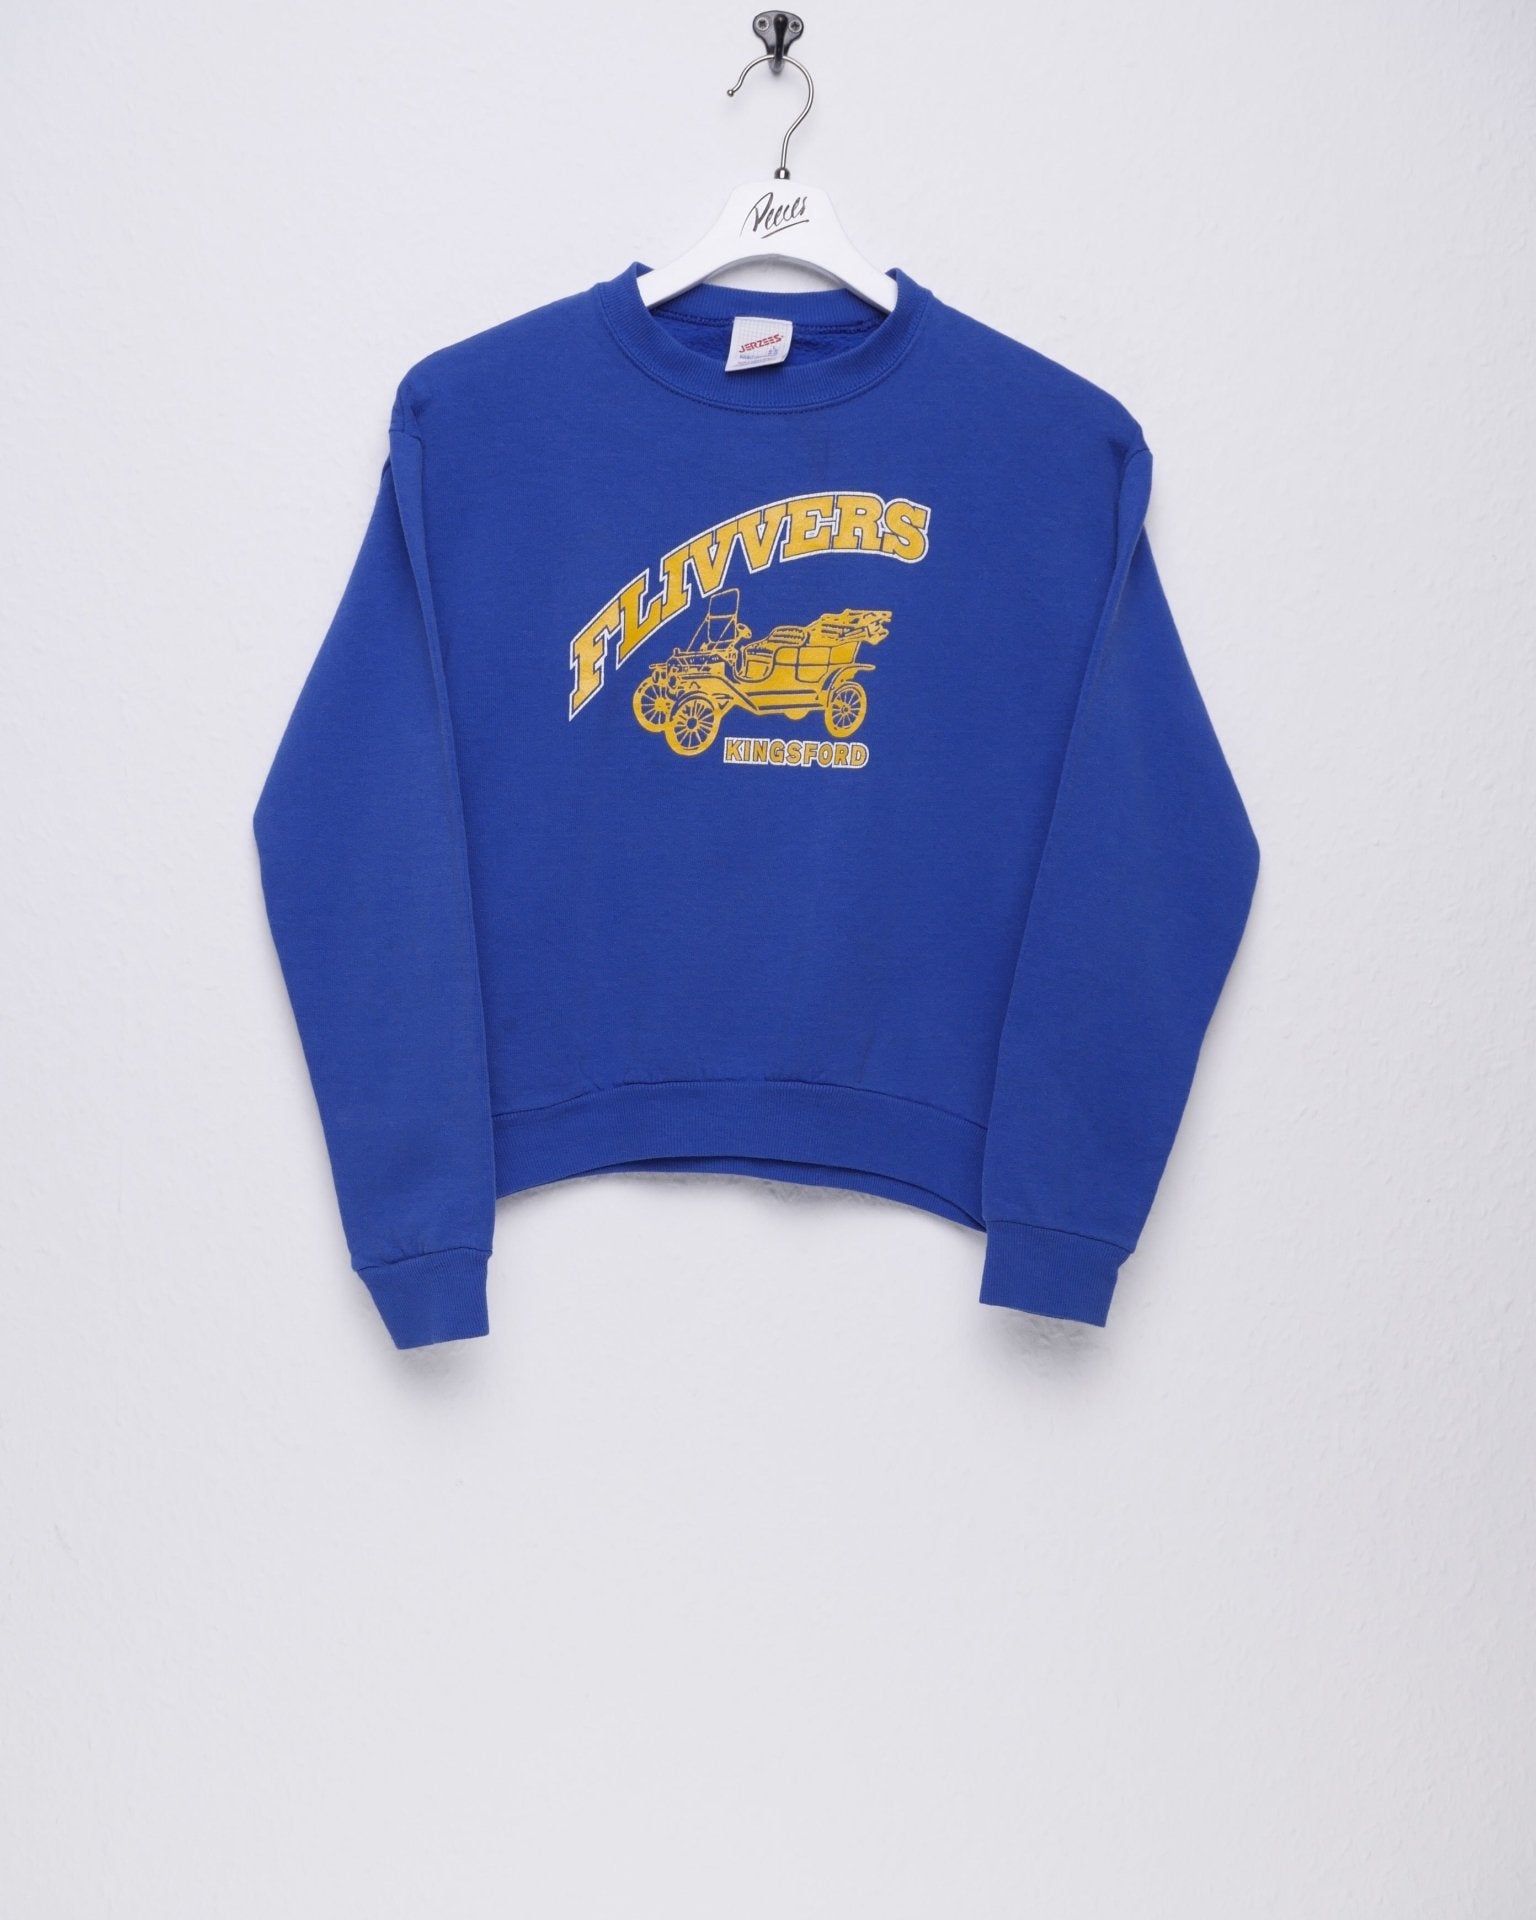 jerzees Flivvers Kingsport printed Logo Sweater - Peeces